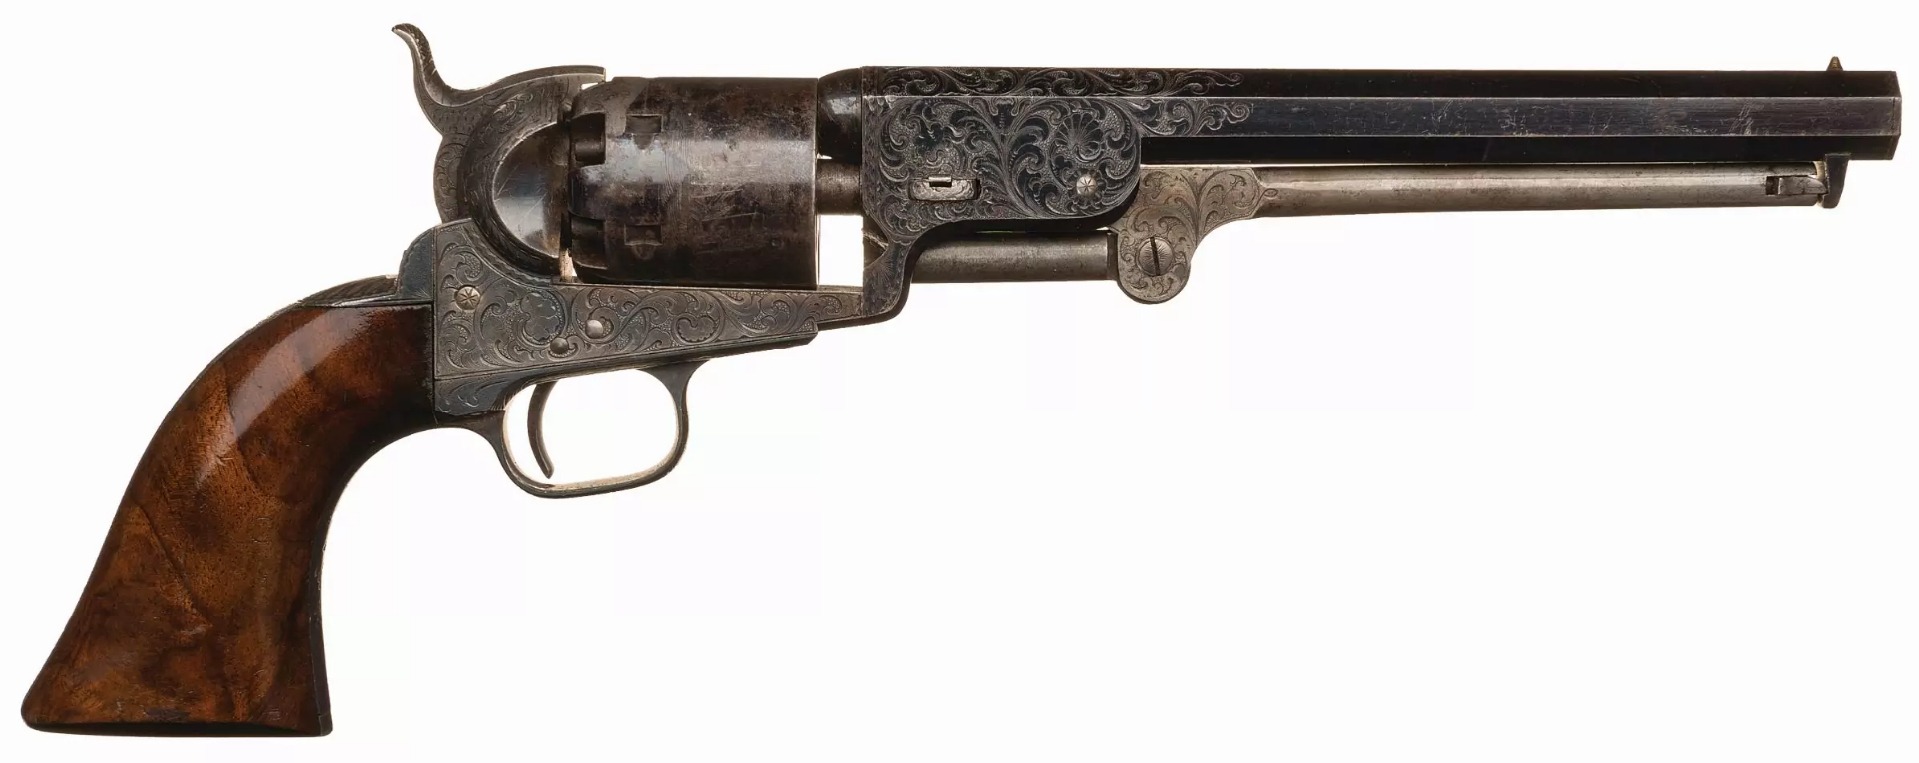 Colt M1851 Navy revolver